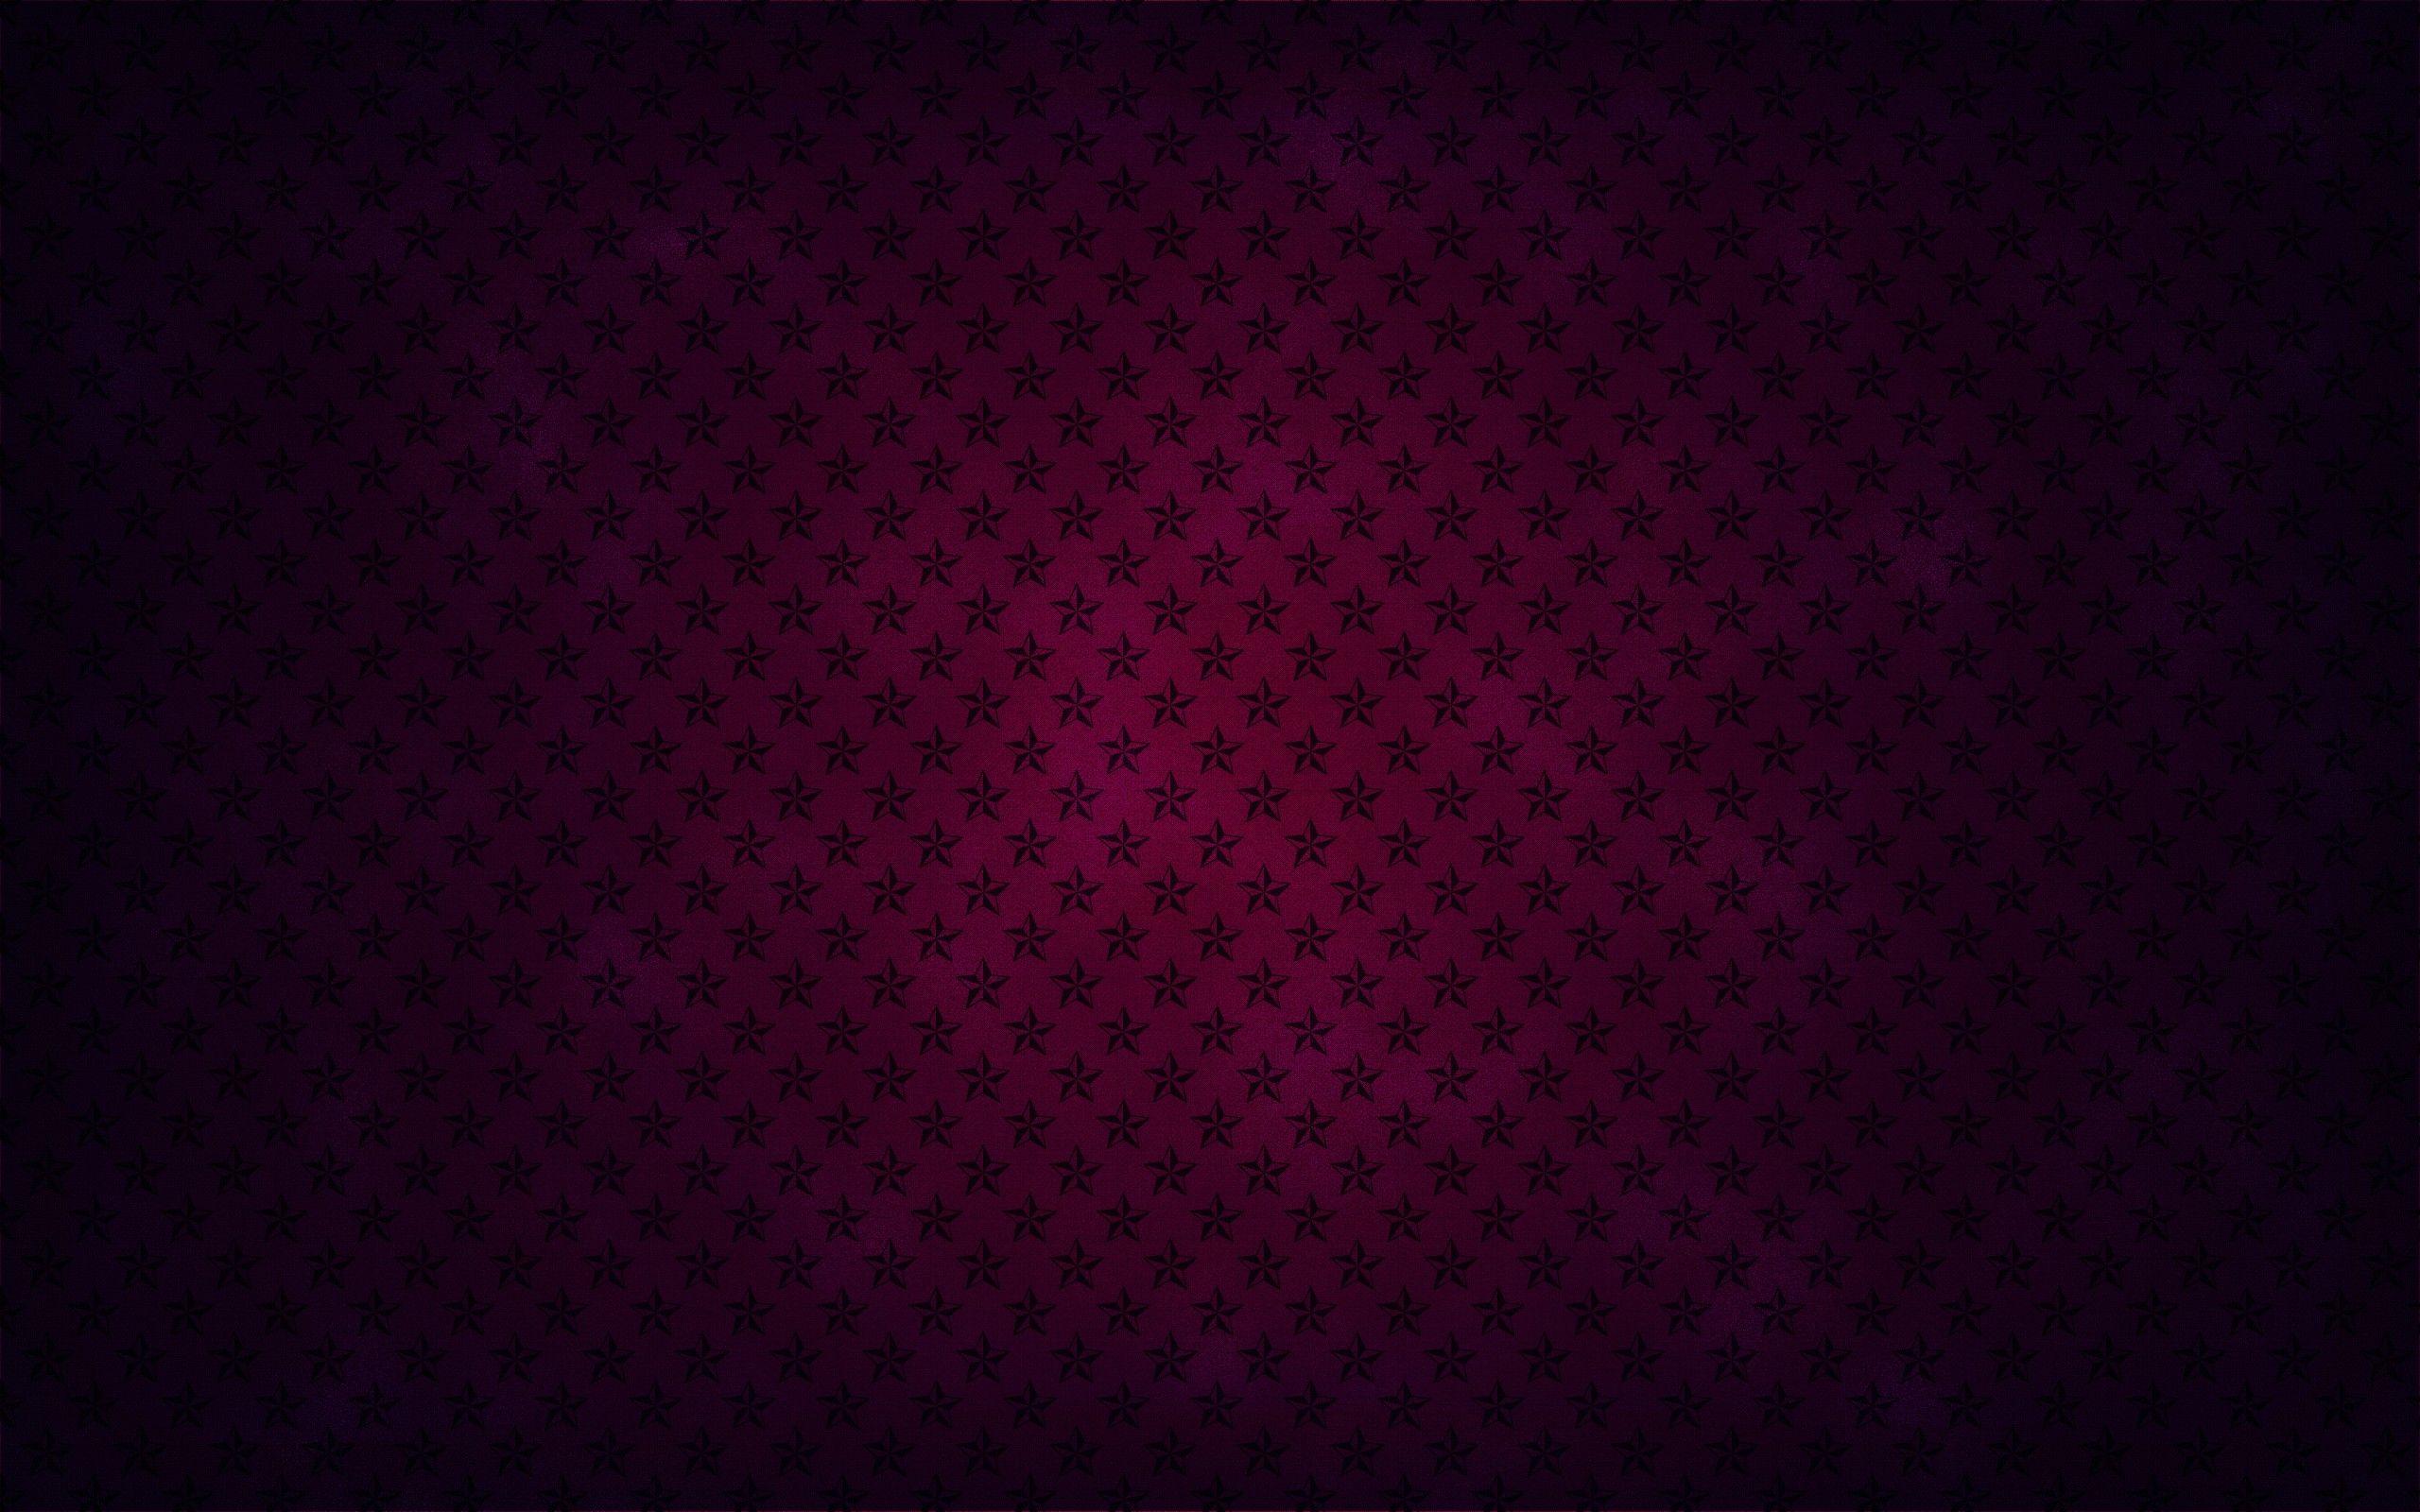 Wallpaper.wiki Free Plain Pink Black Star Background PIC WPE001782